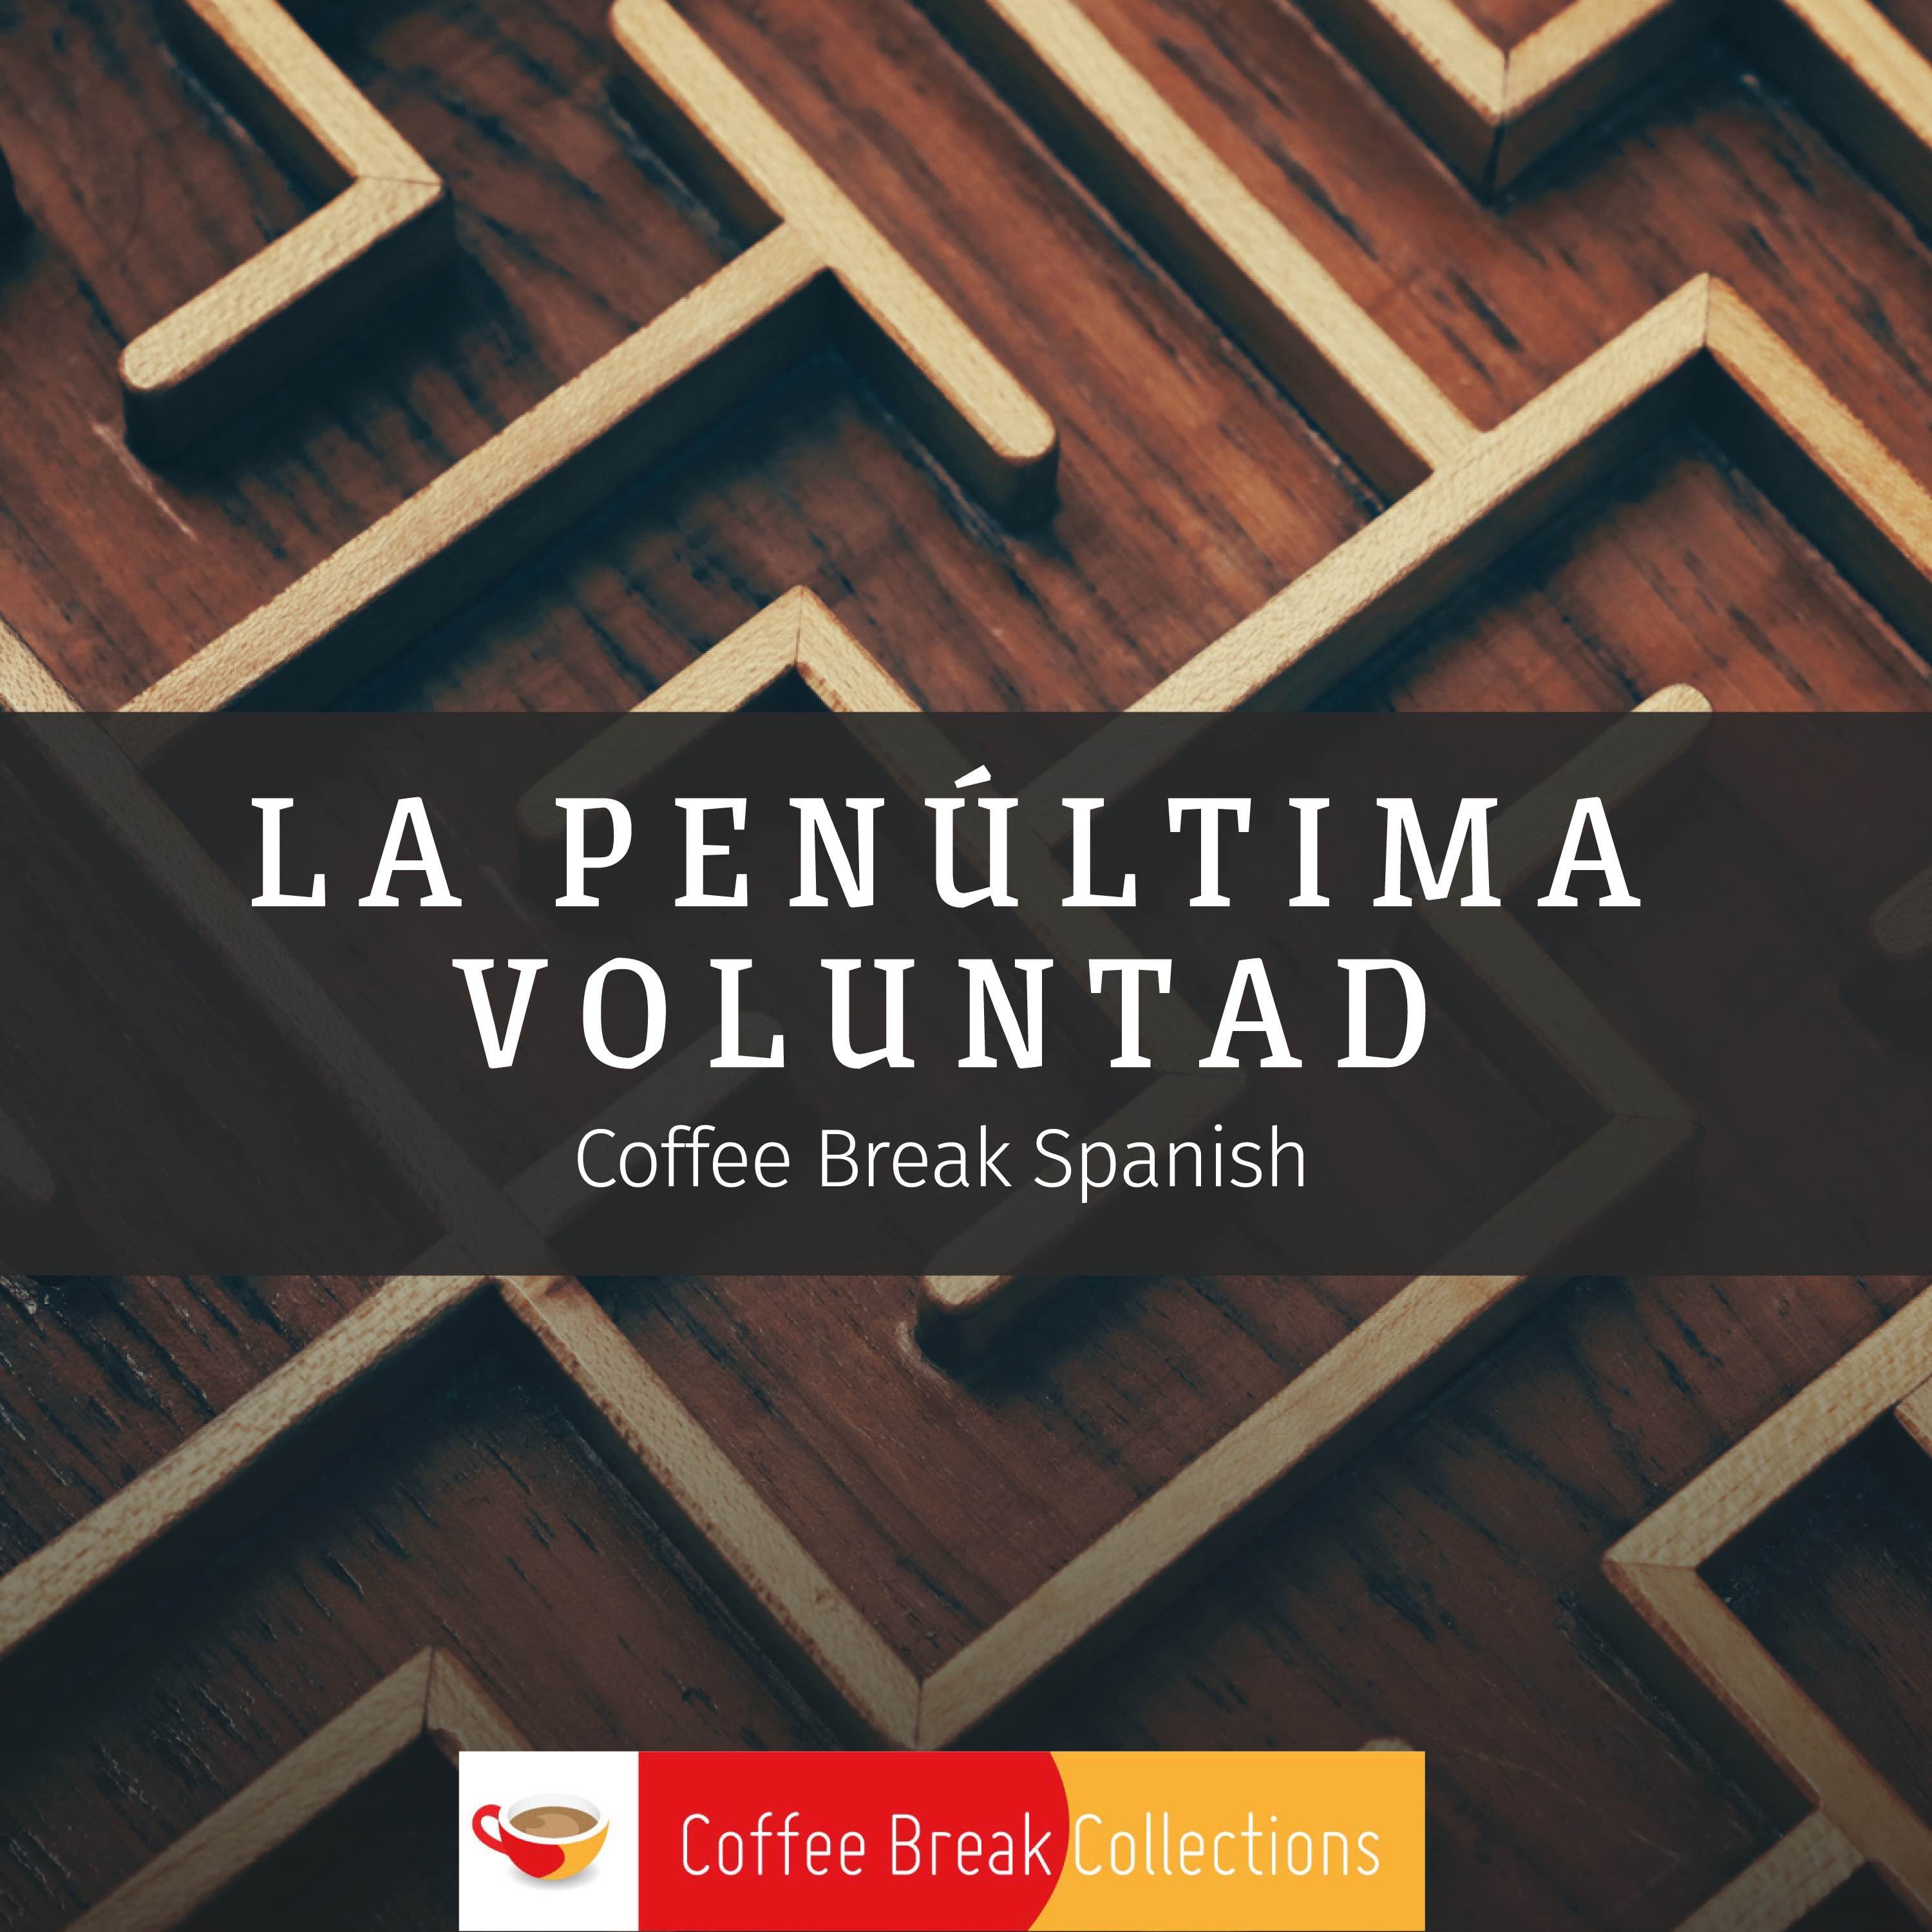 Introducing La penúltima voluntad - Coffee Break Spanish Season 5